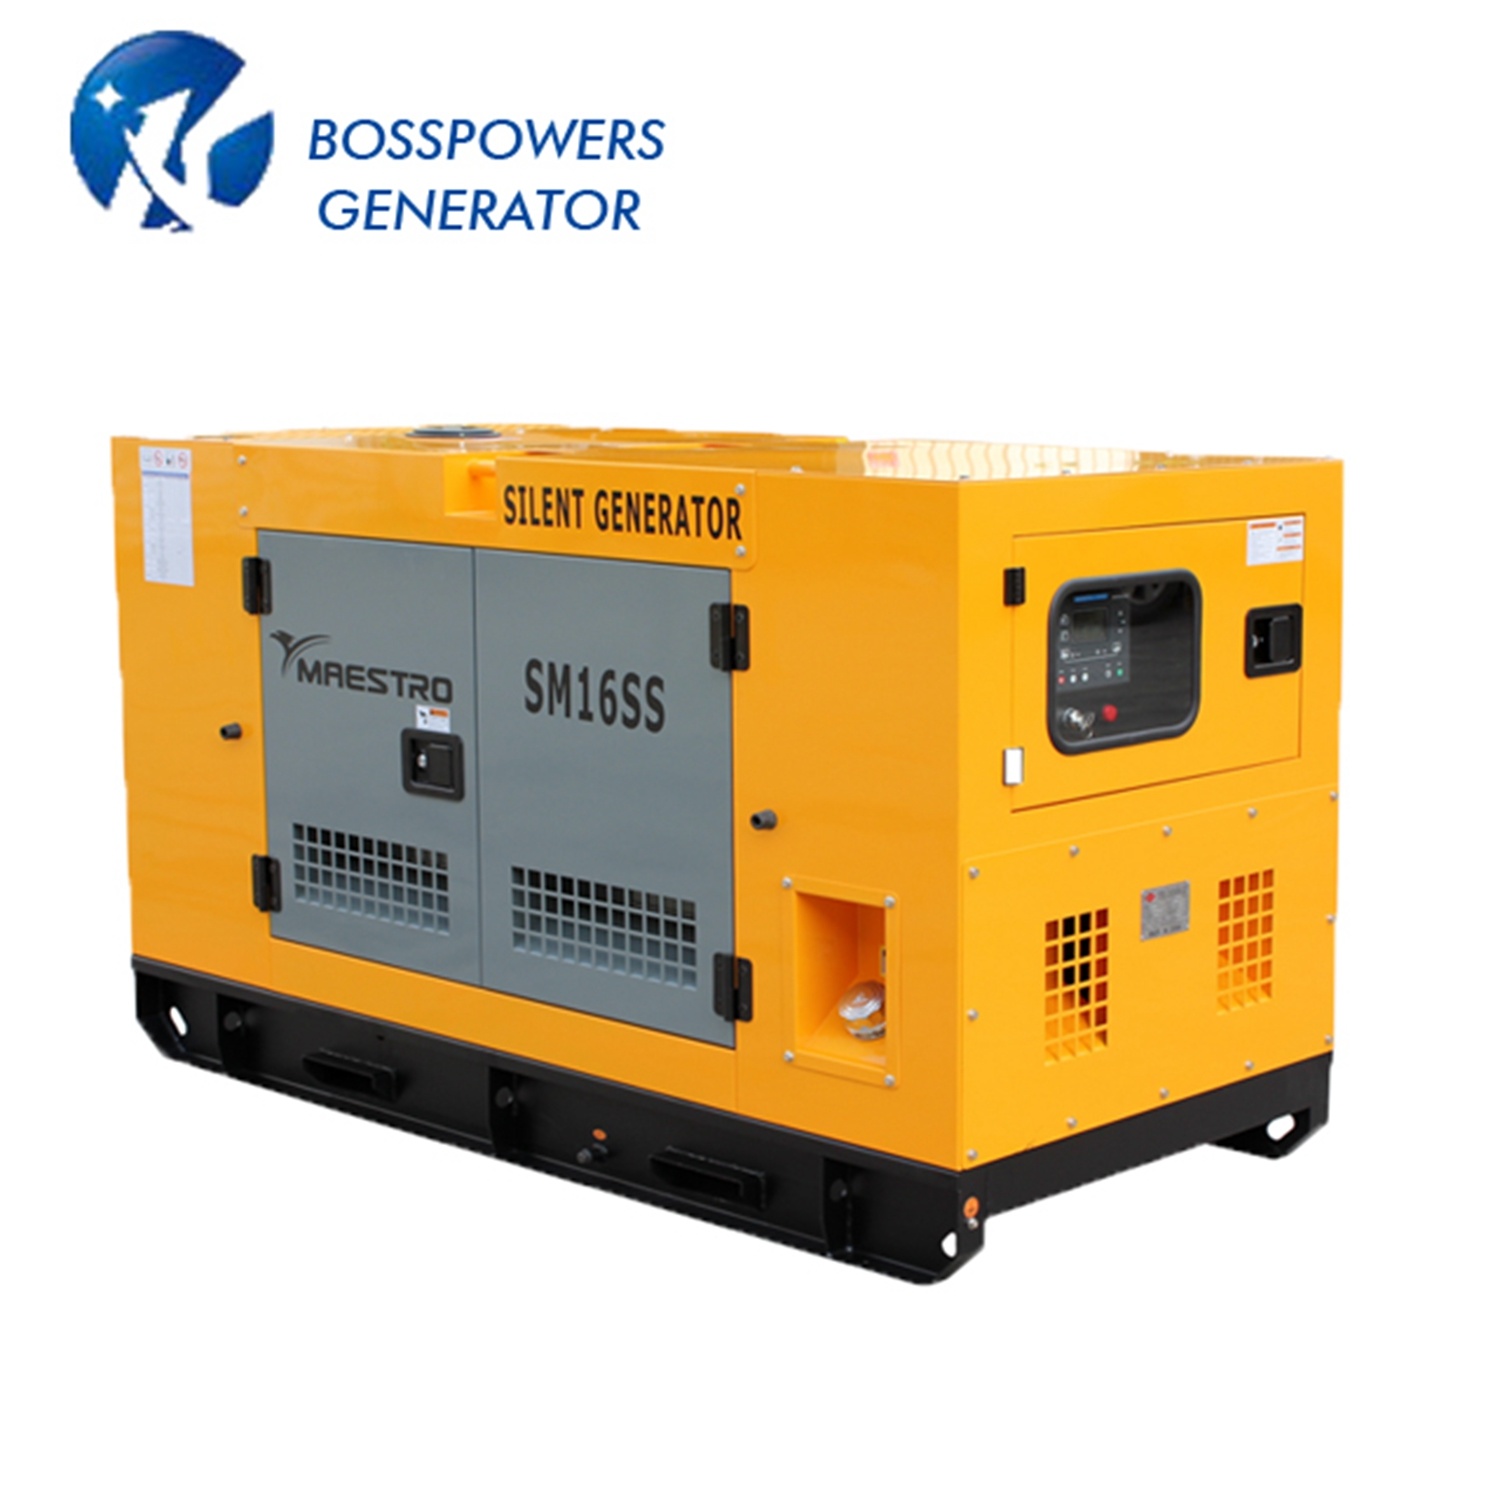 Soundproof Diesel Generator 90kw Powered by Deutz Bf4m1013ec G2